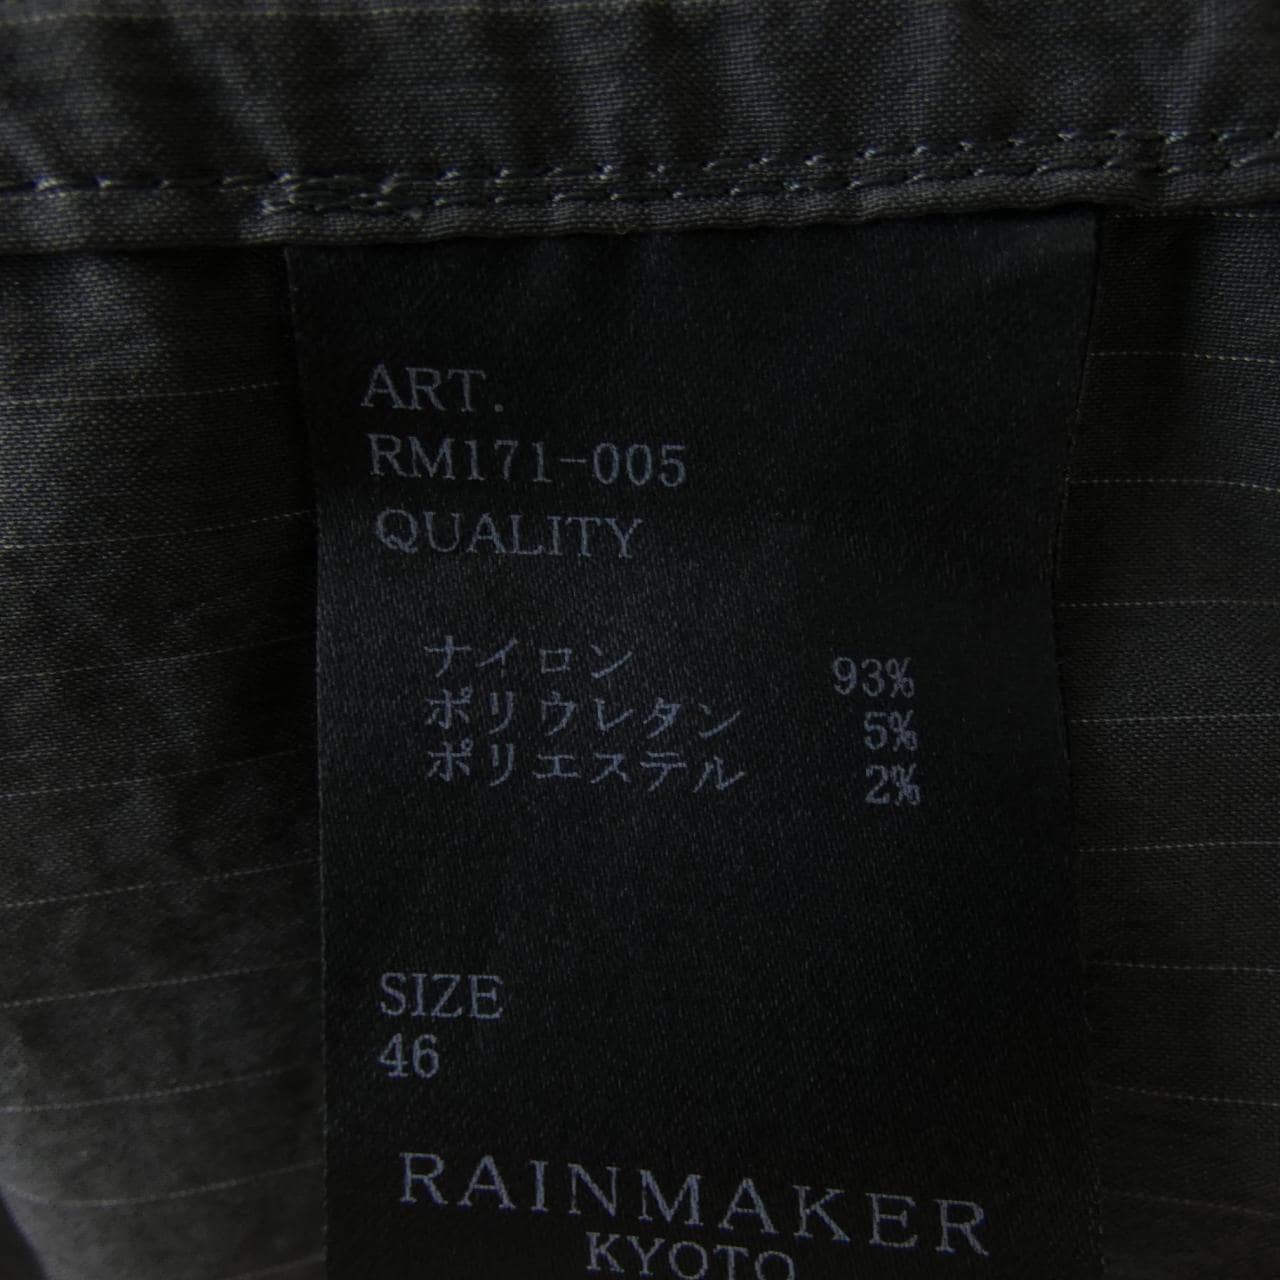 RAINMAKER ジャケット